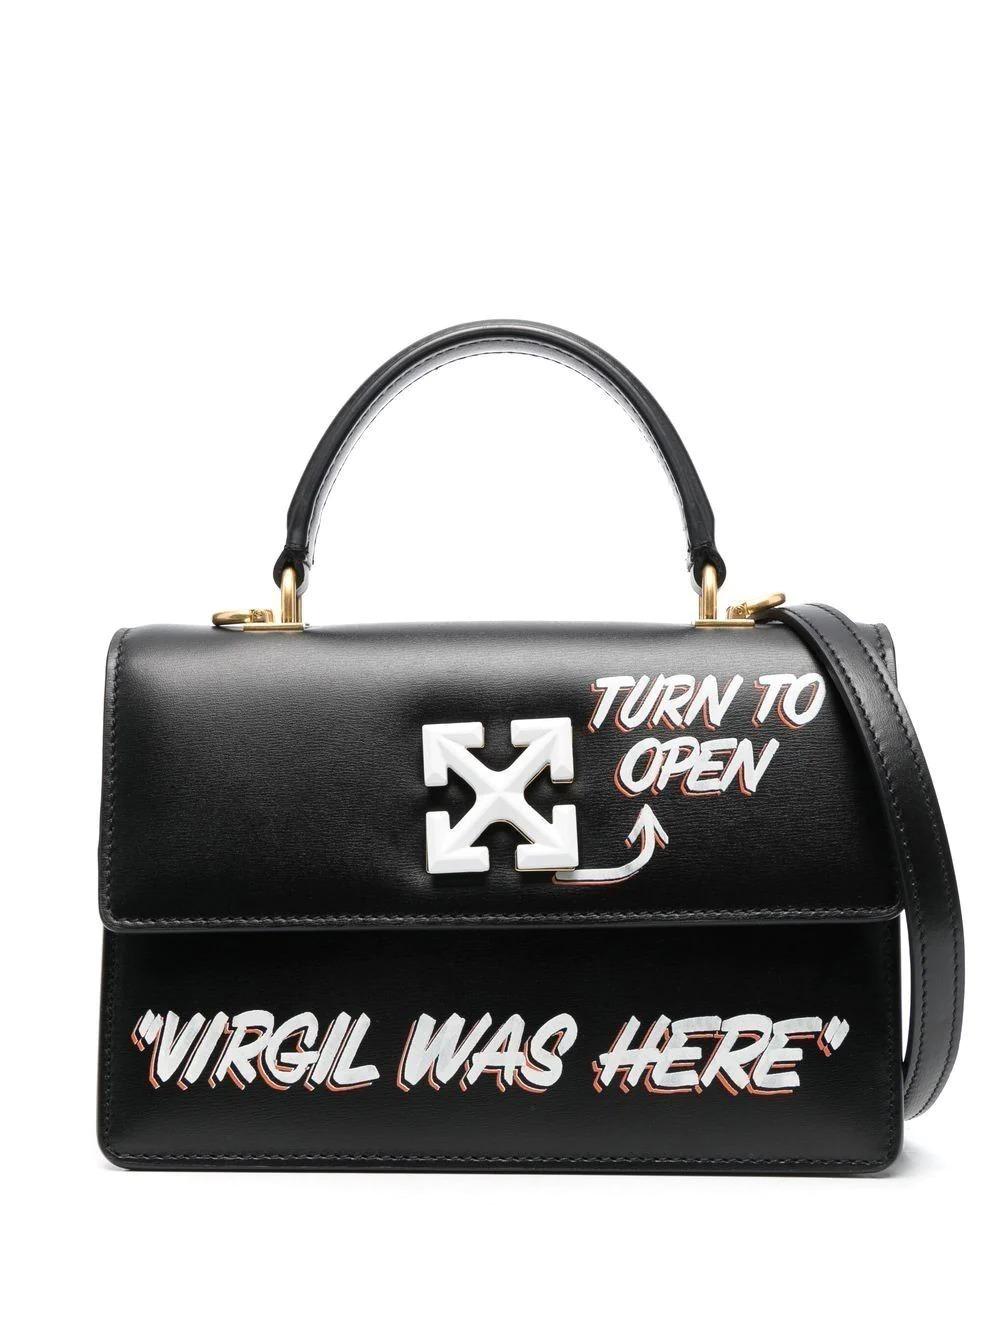 Off-White c/o Virgil Abloh Jitney 1.4 Vigin Was Here Tote Bag in